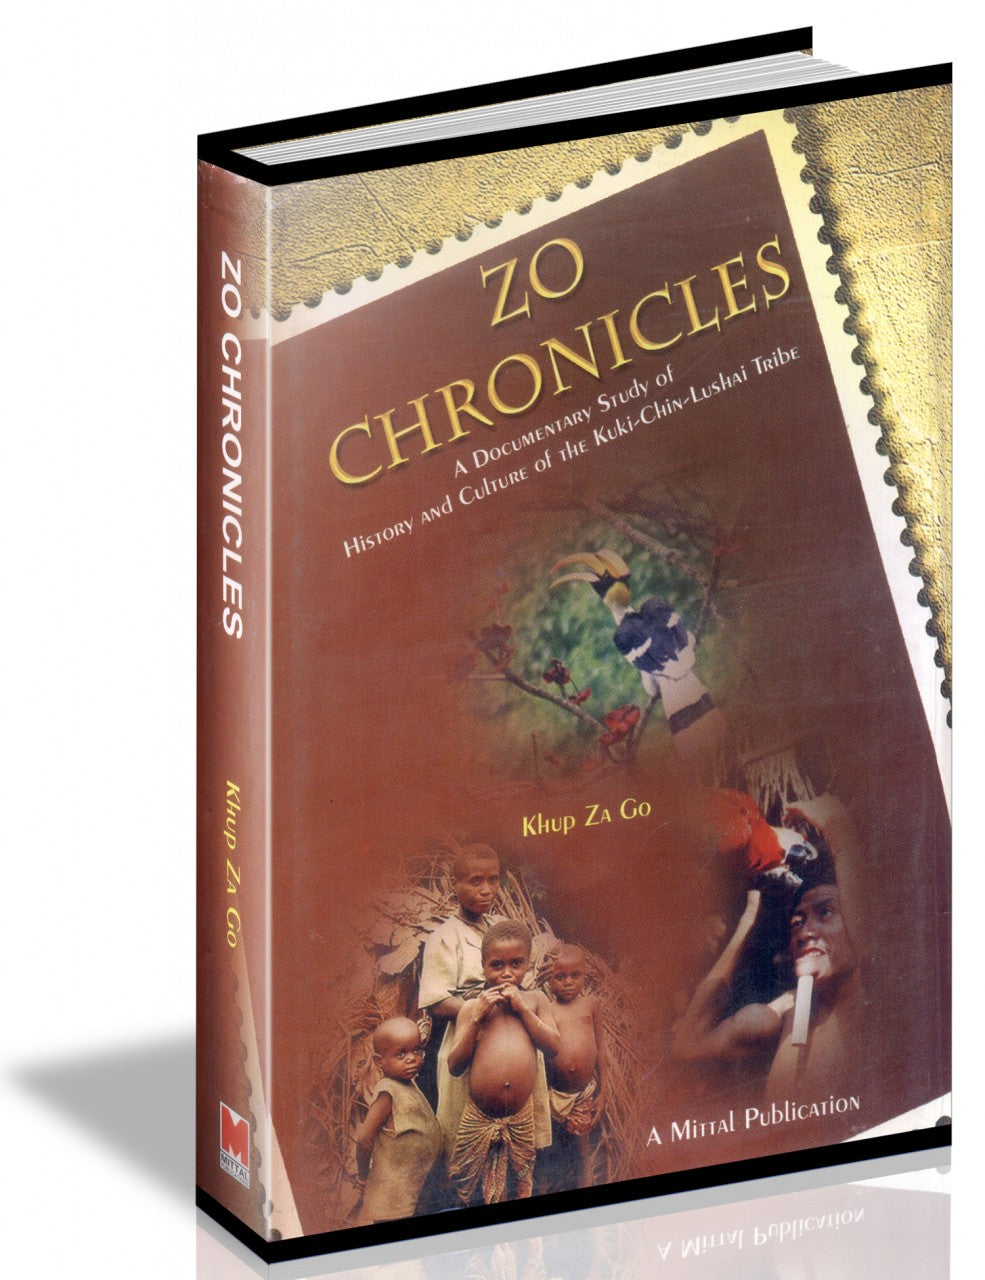 Zo Chronicles